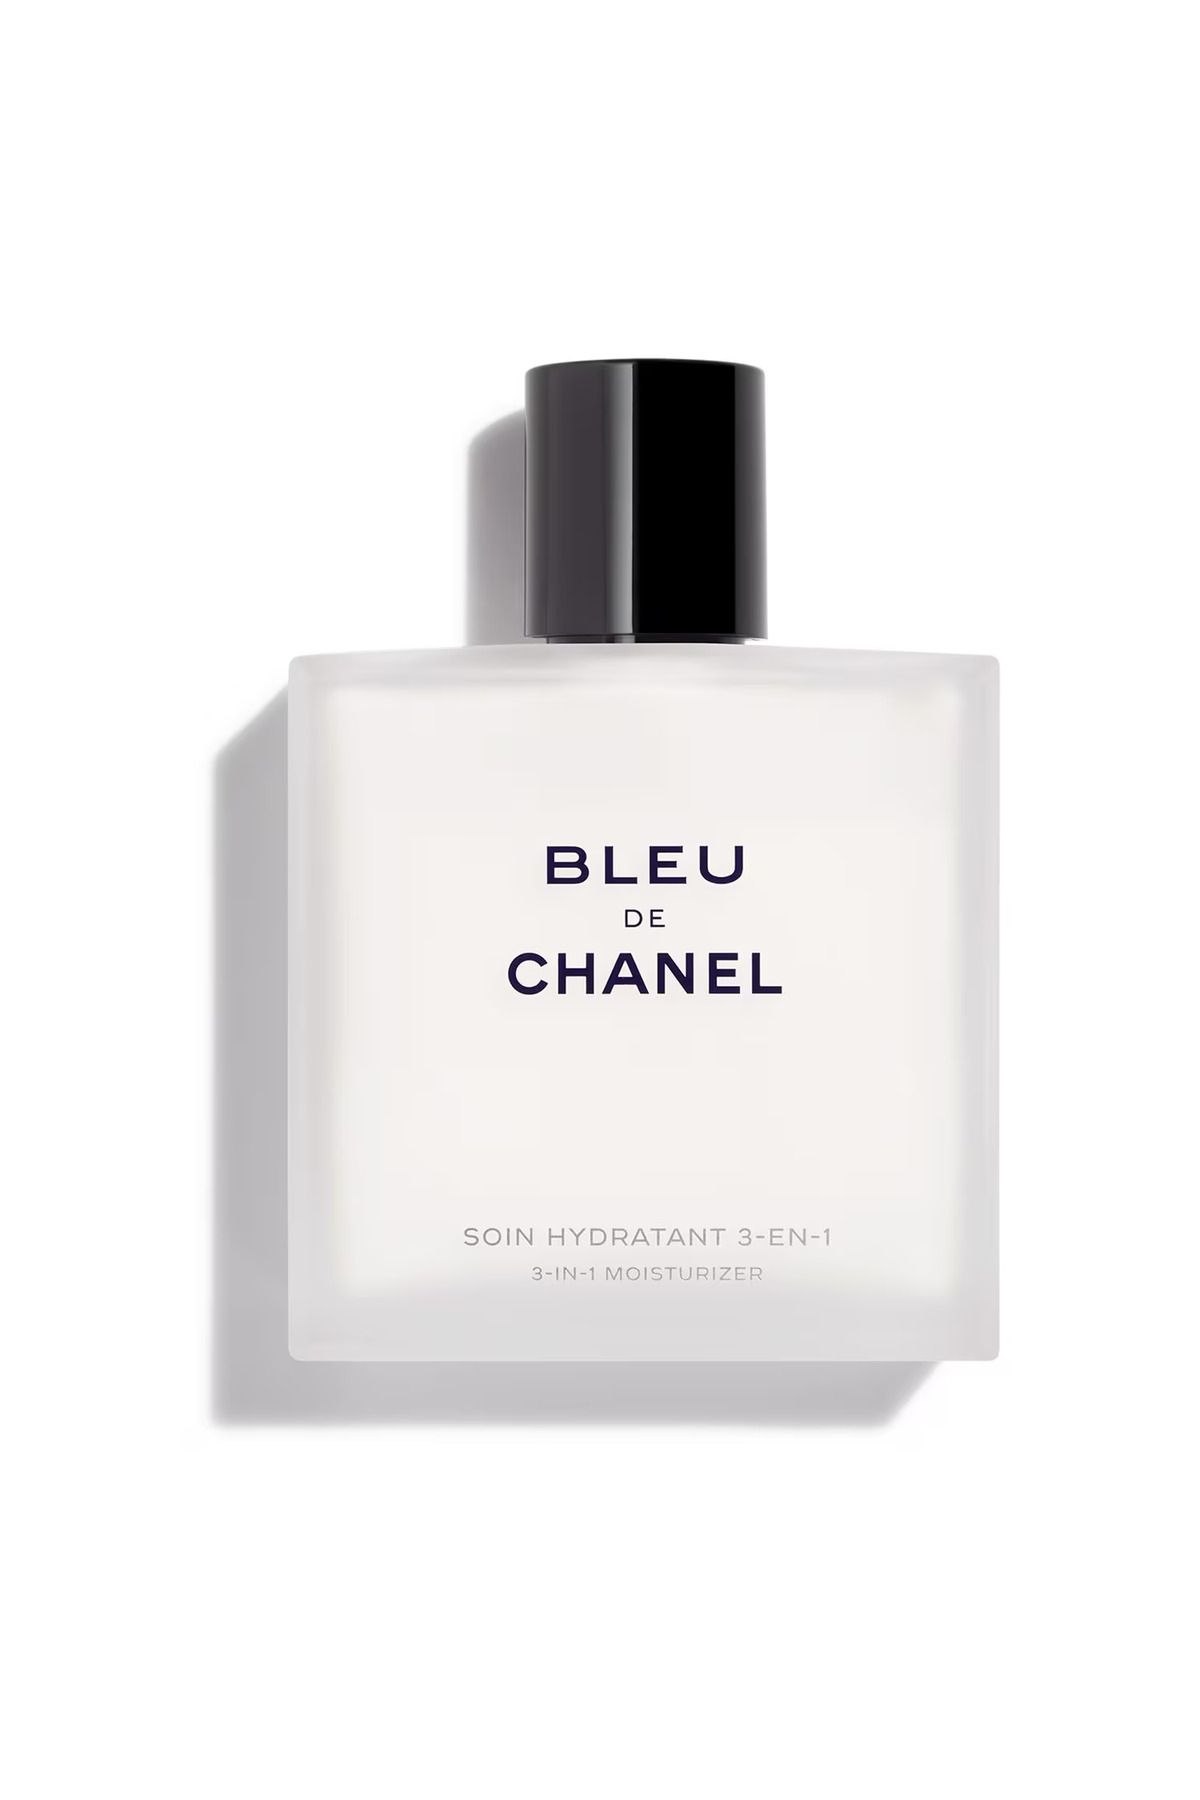 Chanel BLEU DE CHANEL Nemlendirici-BLEU DE CHANEL 3'ü 1 Arada tıraştan sonra cildi nemlemdirir-90ml